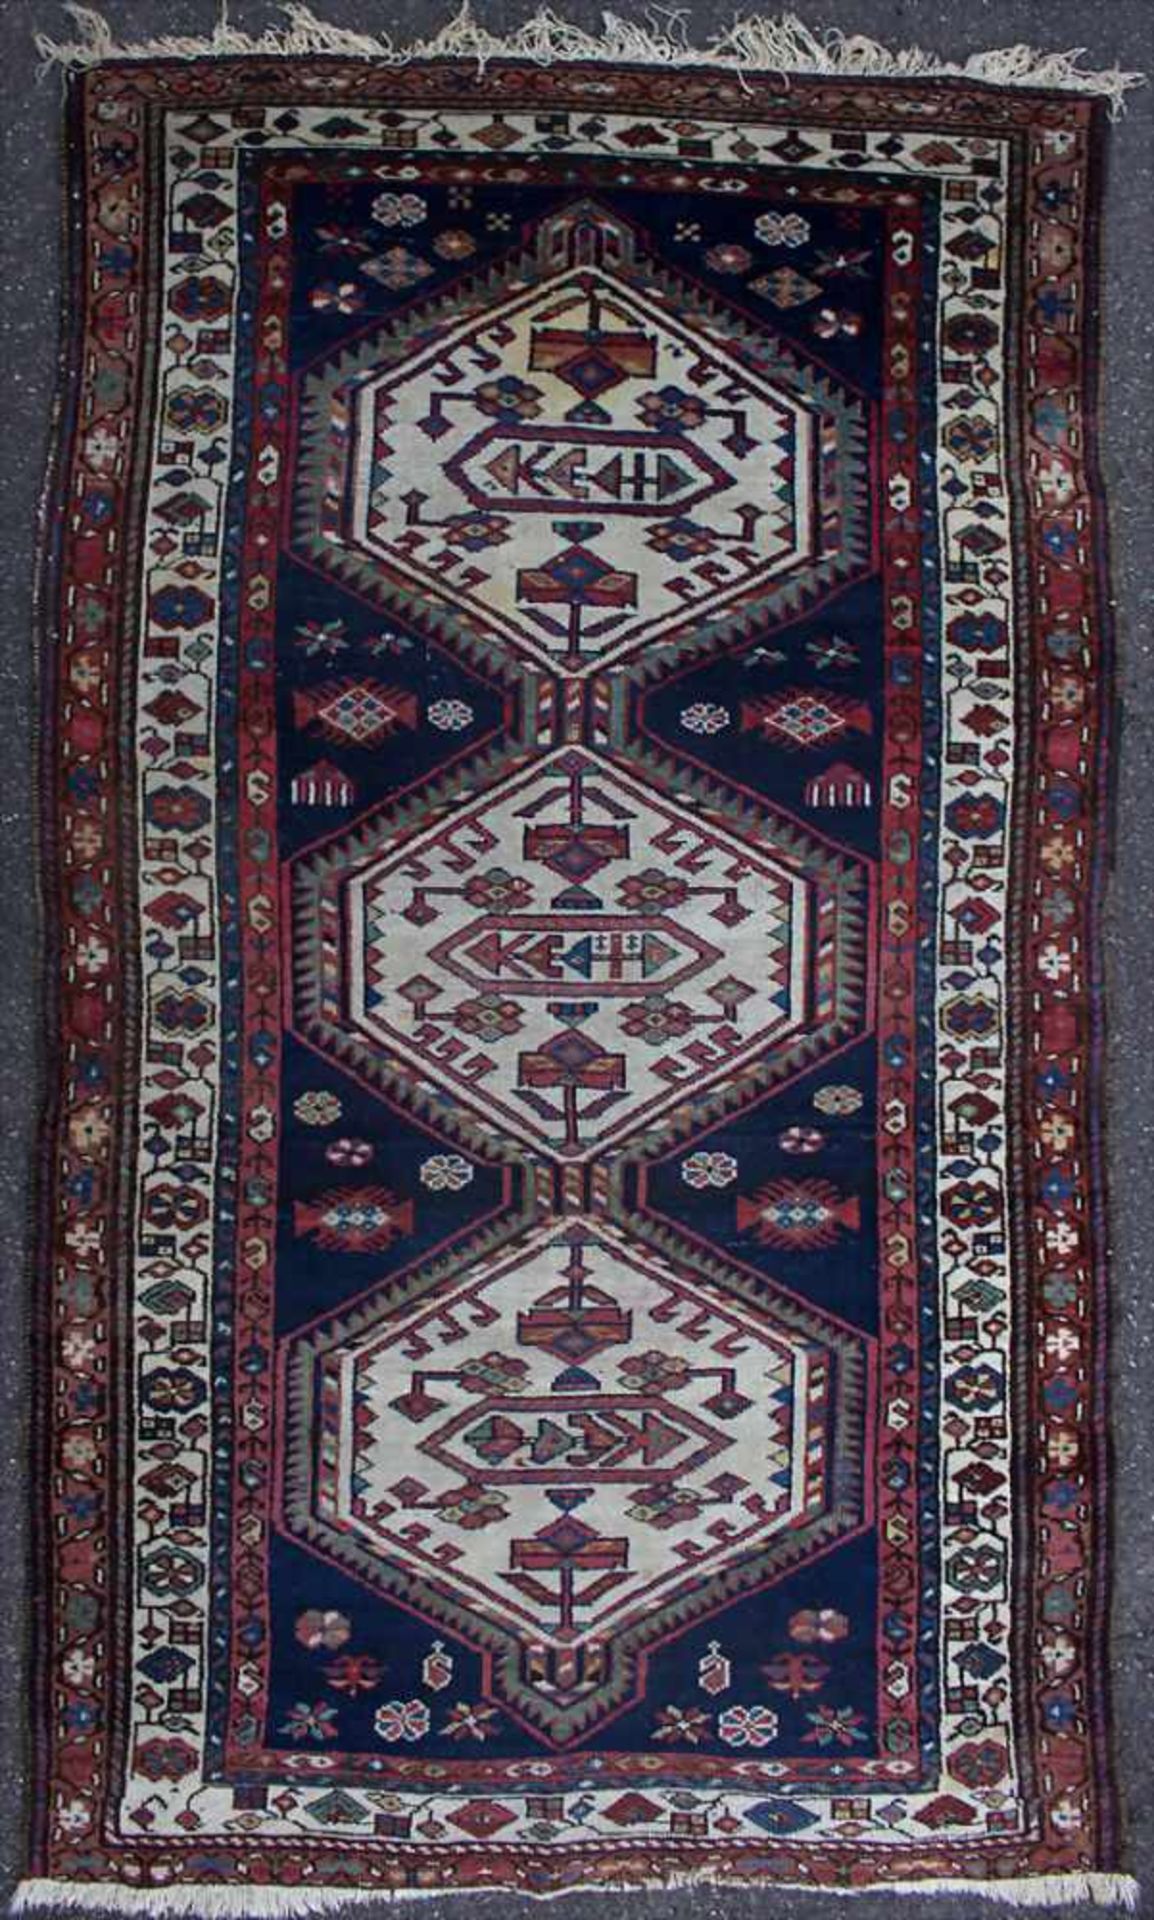 Orientteppich 'Hamadan' / An oriental carpet 'Hamadan'Material: Wolle auf Baumwolle, Maße: 112,5 x